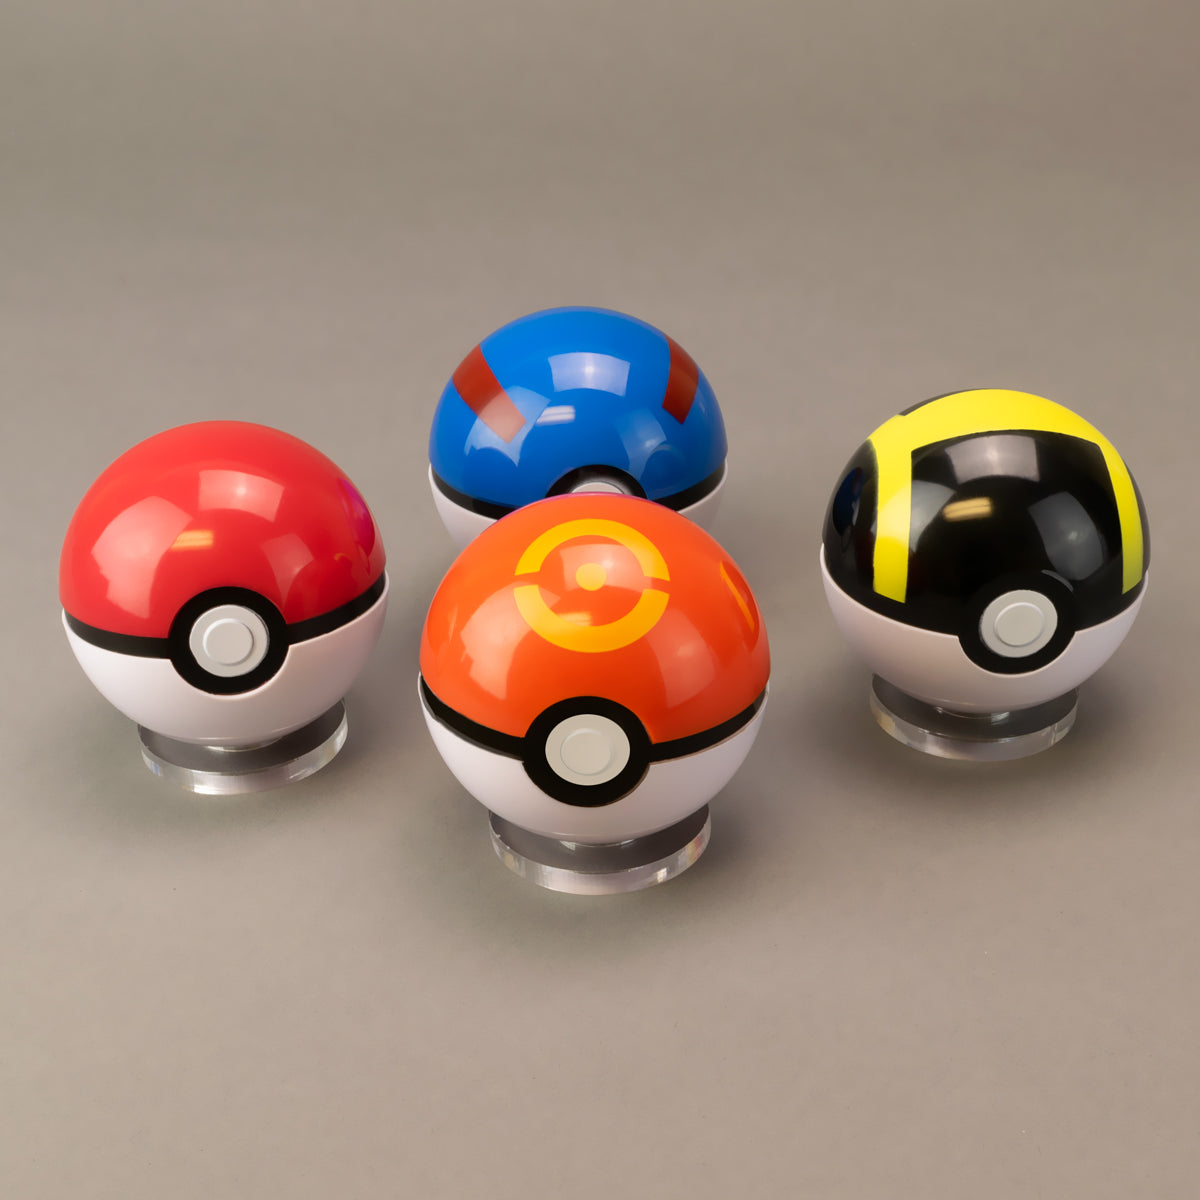 Pokémon Poké Ball Display – Rose Colored Gaming